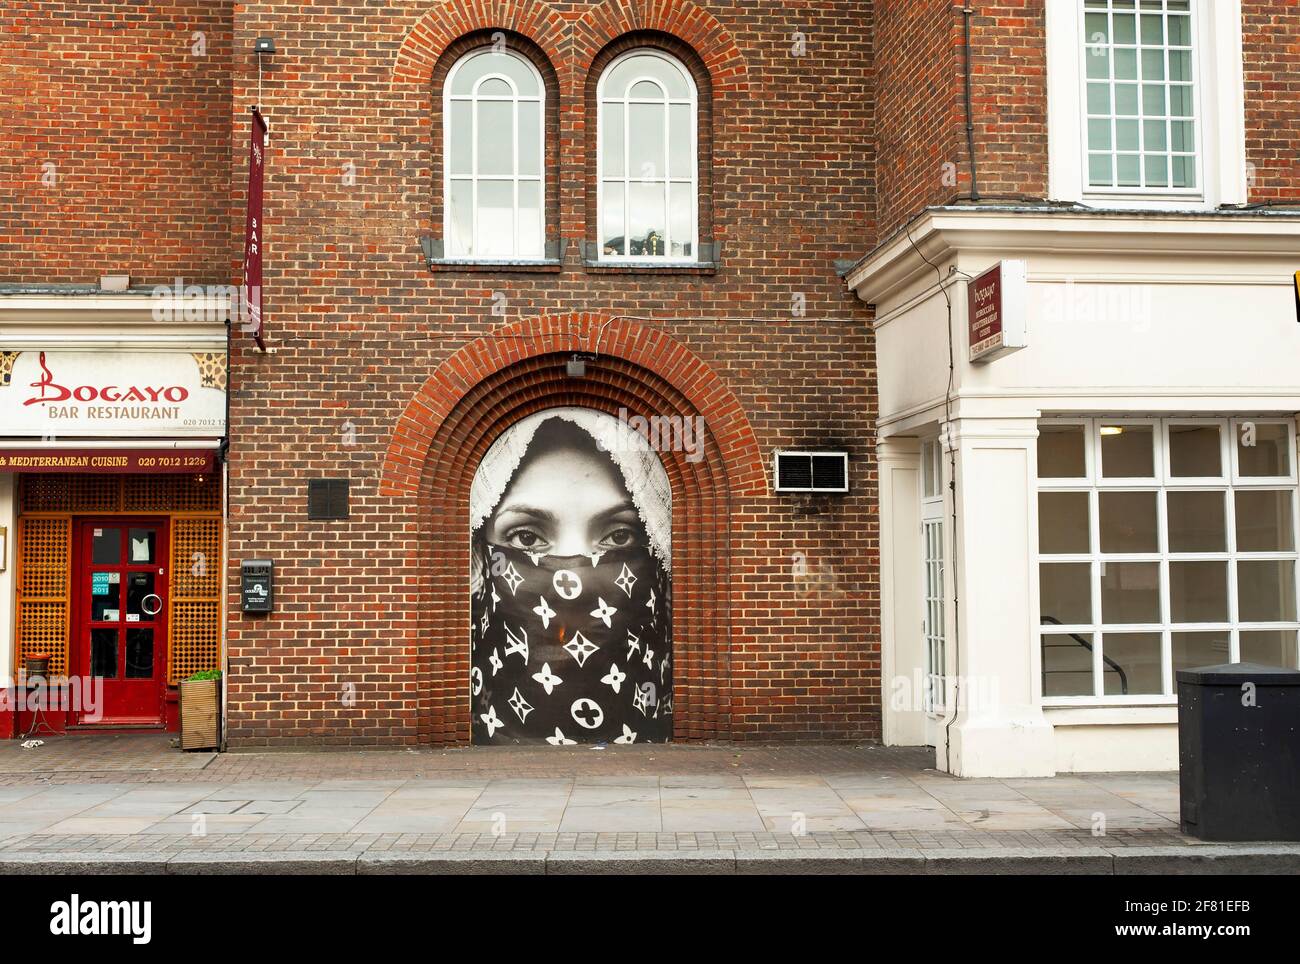 Mujer con un niqab Louis Vuitton. Arte callejero del artista marroquí Hassan Hajjaj. Old Street, Shoreditch, East London, Reino Unido. Jul 2012 Foto de stock